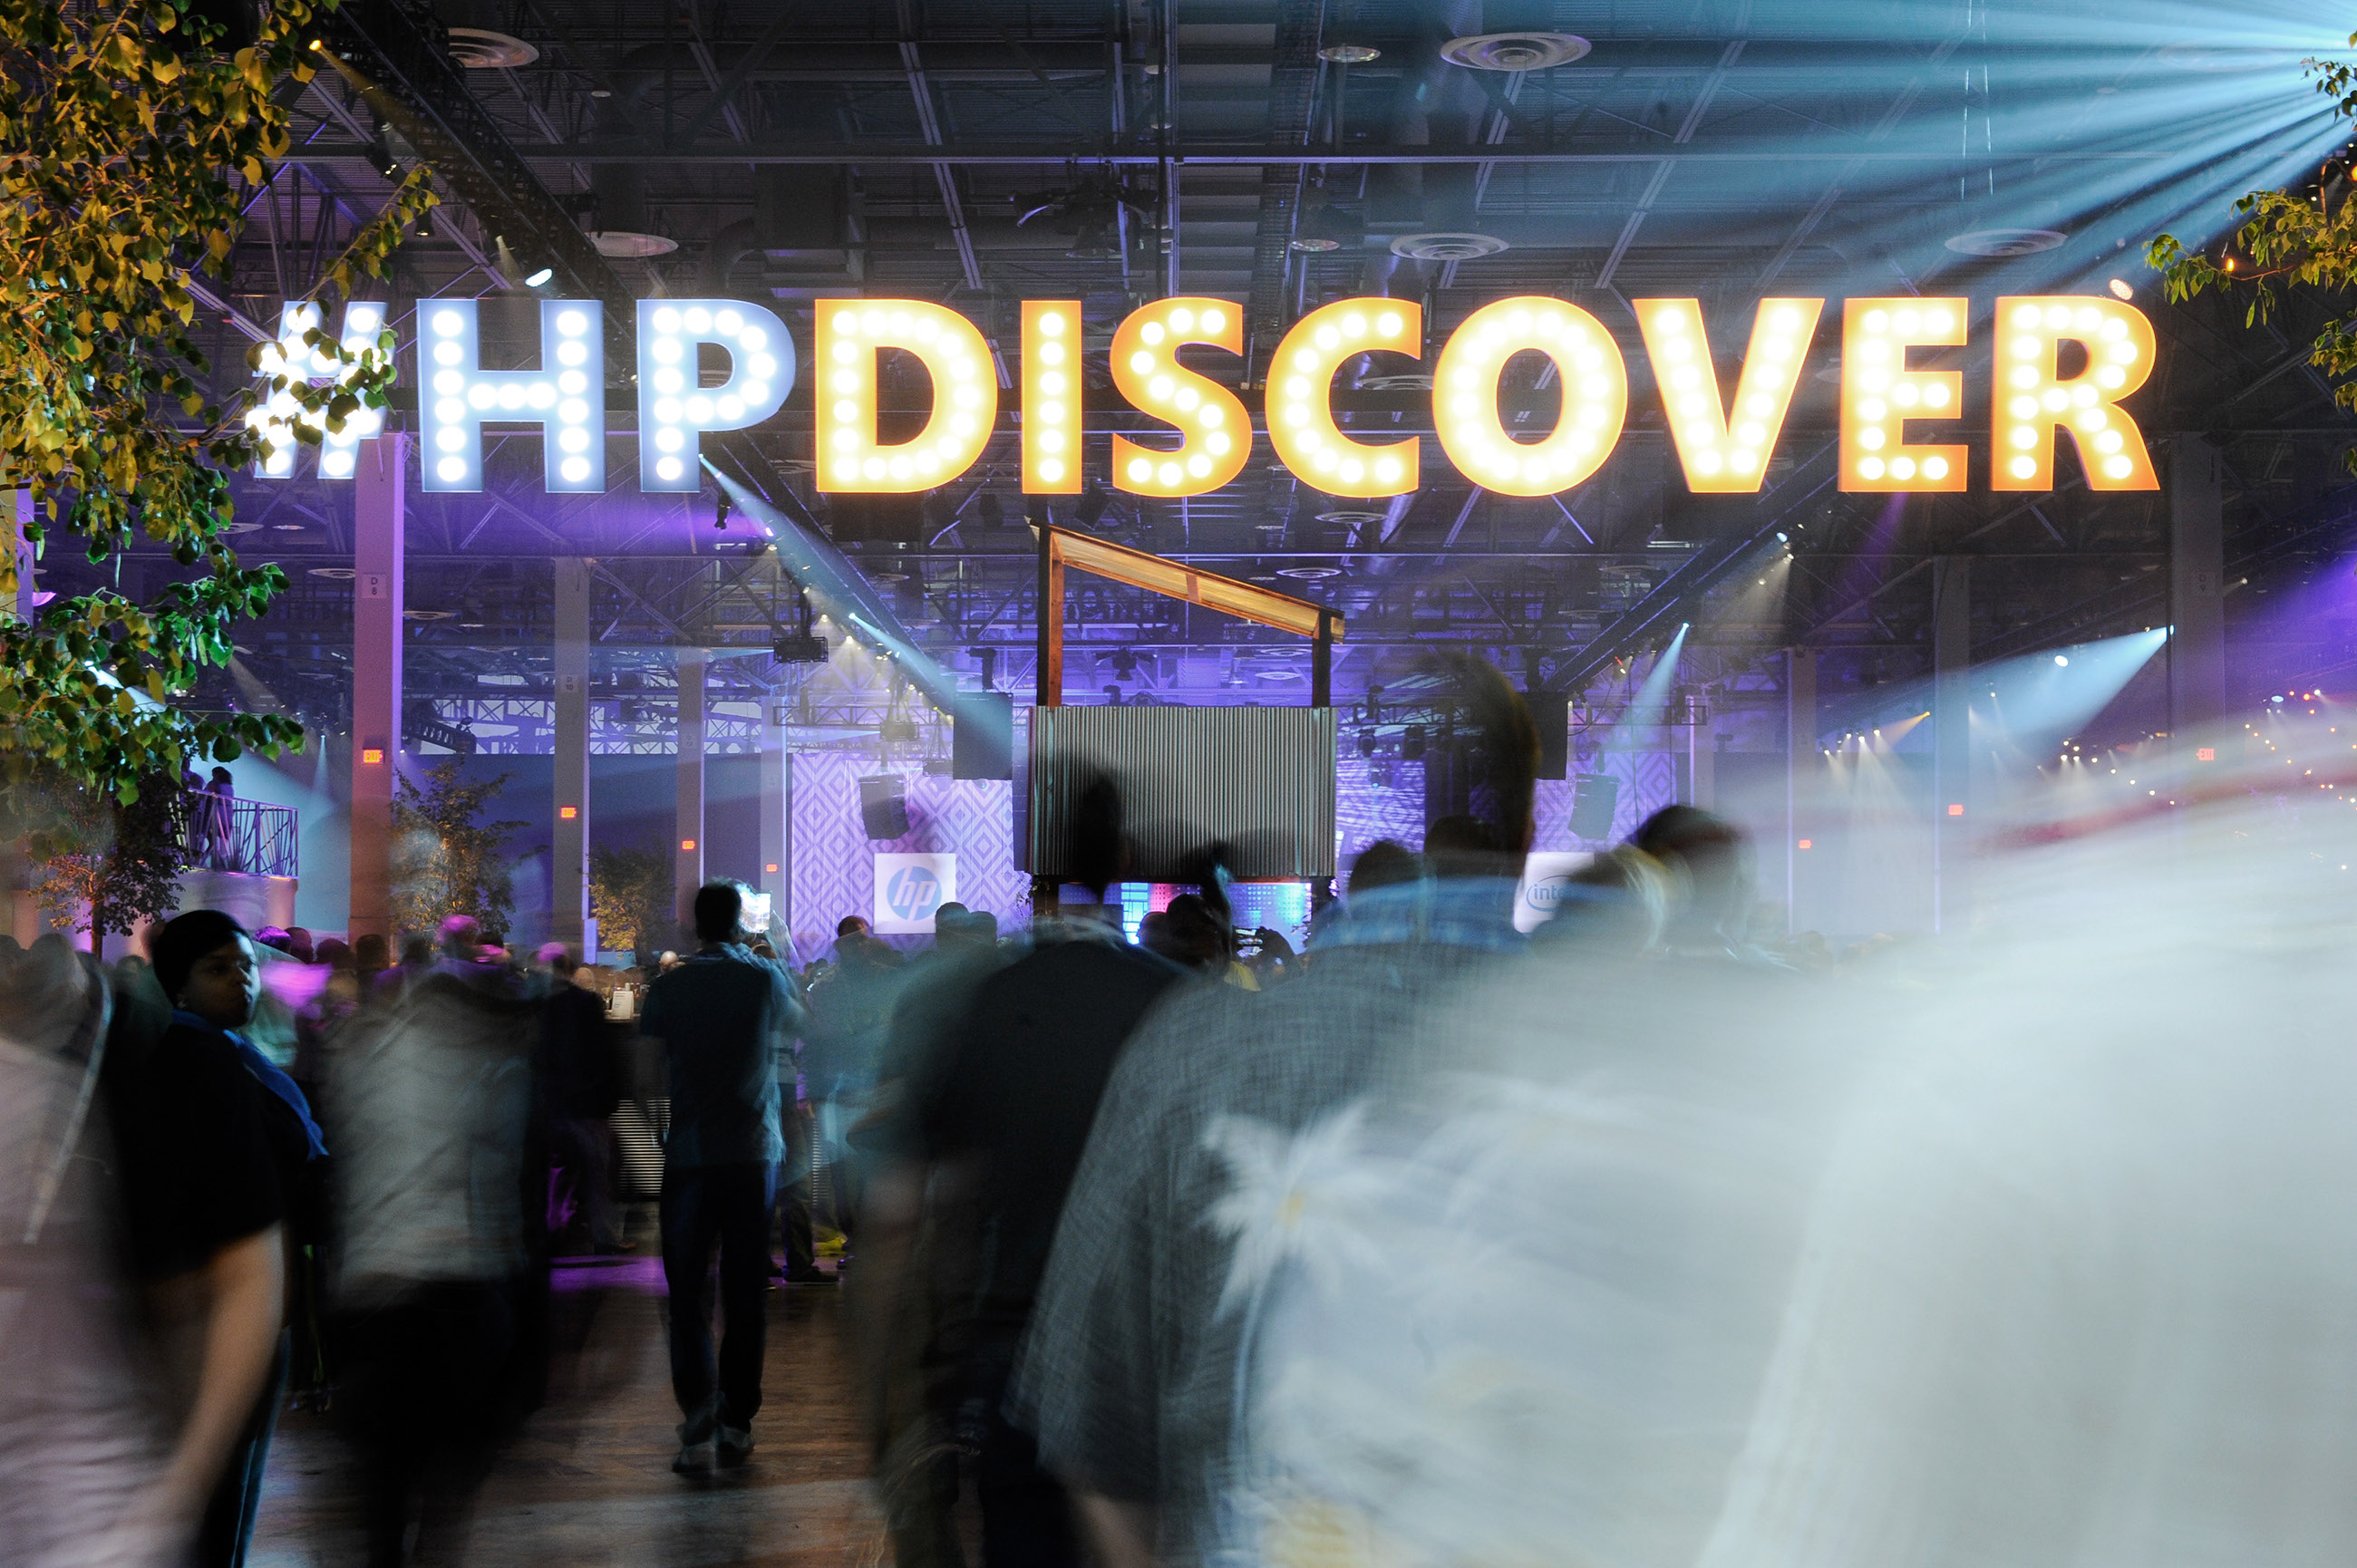 HP Discover 2015, Las Vegas, USA